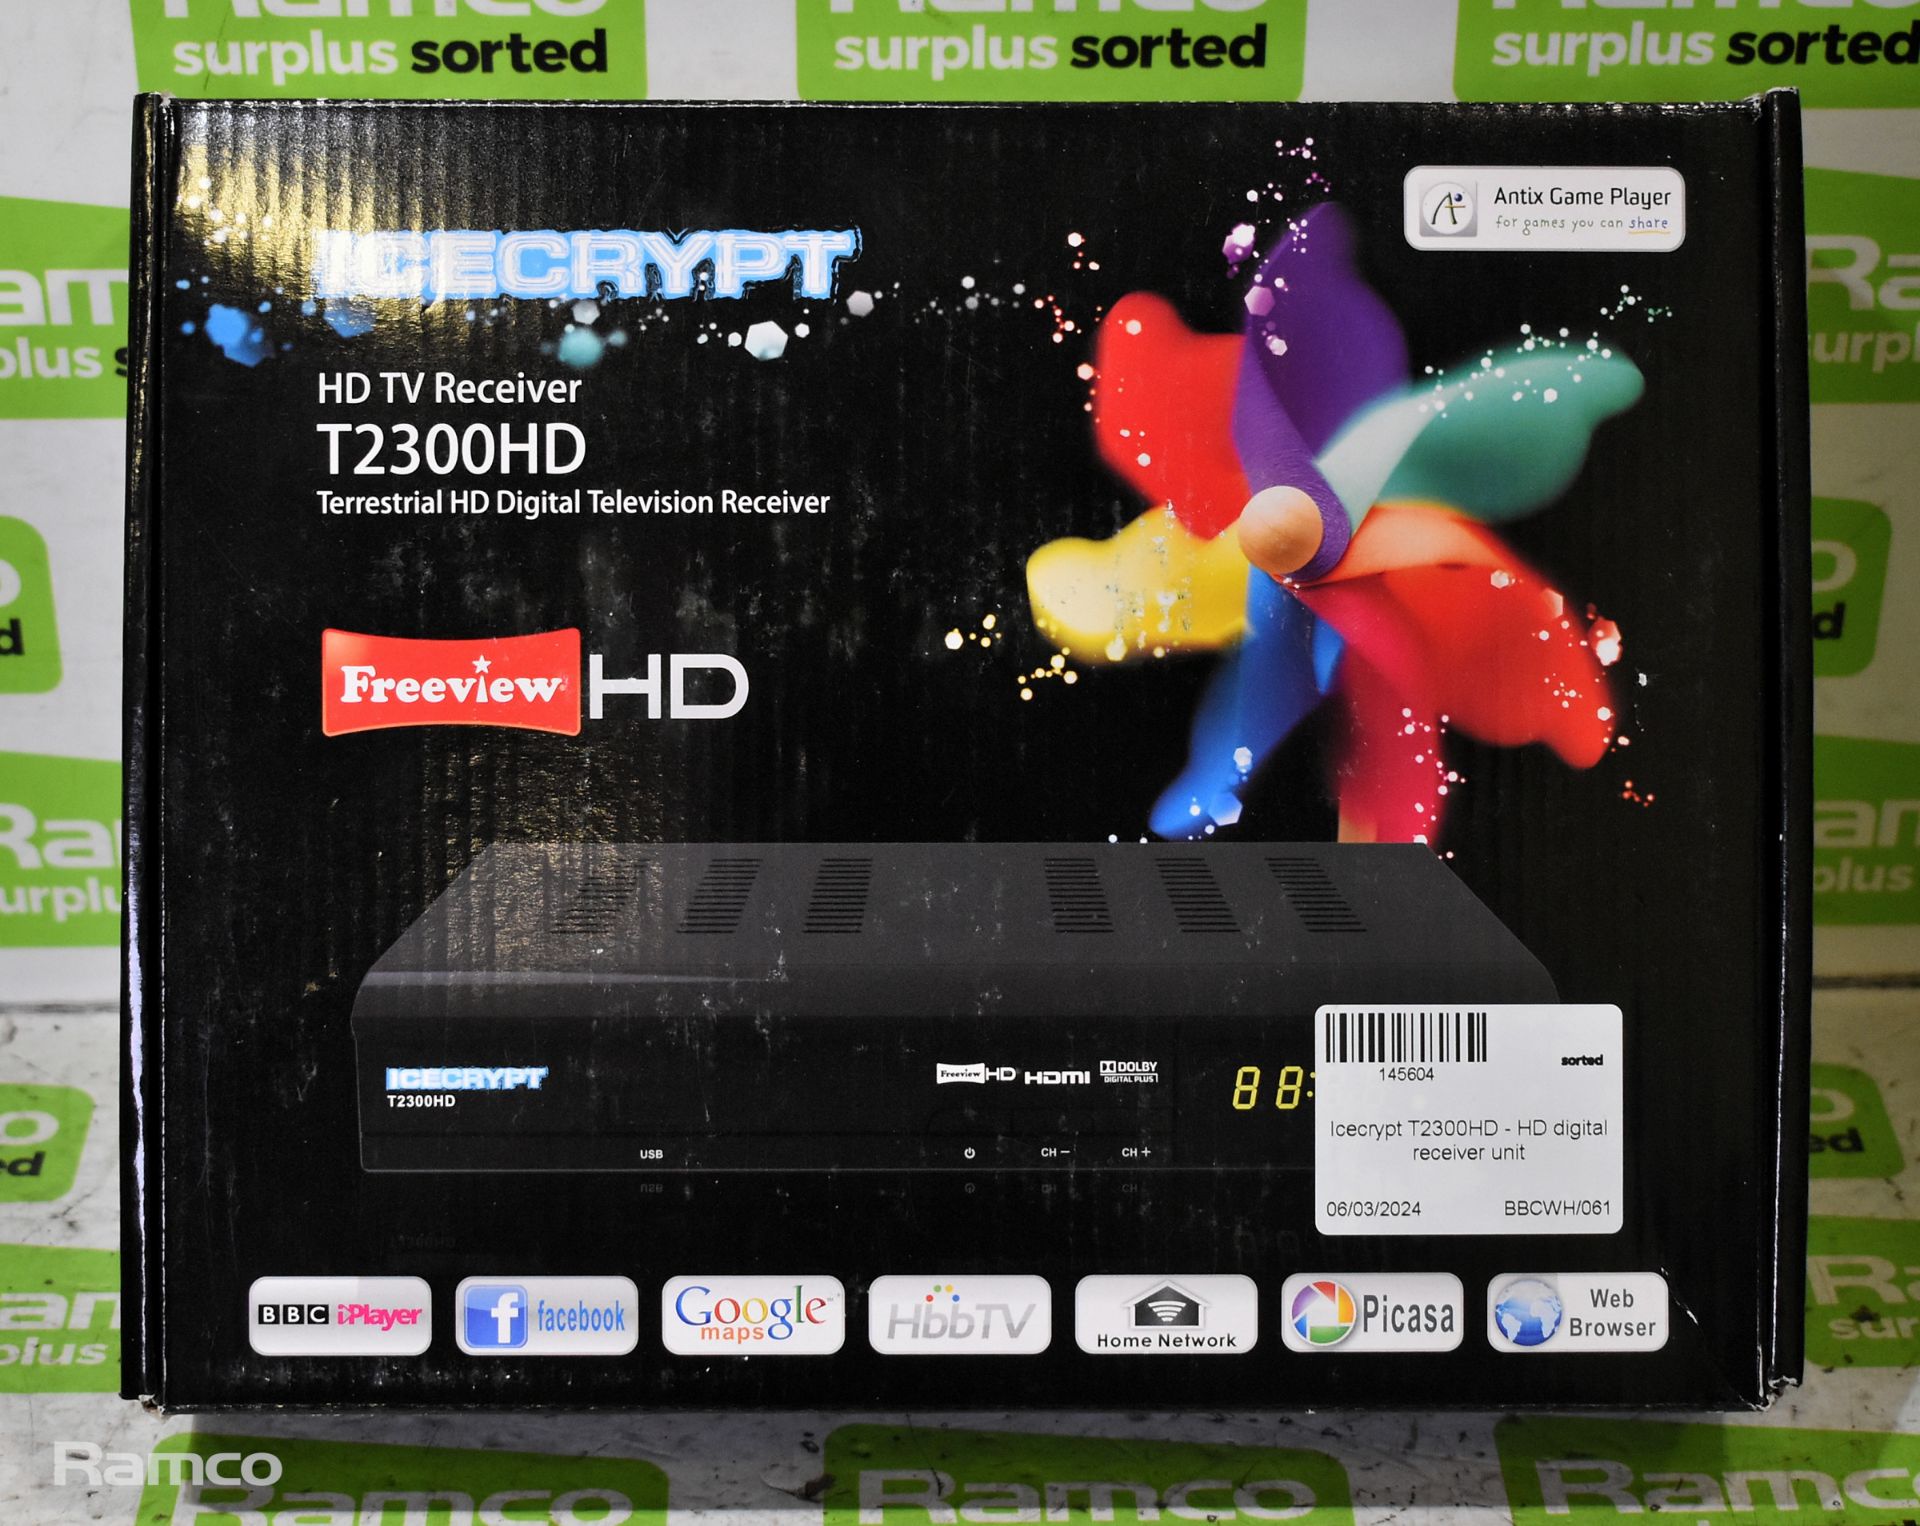 Icecrypt T2300HD HD digital receiver unit - Image 5 of 6